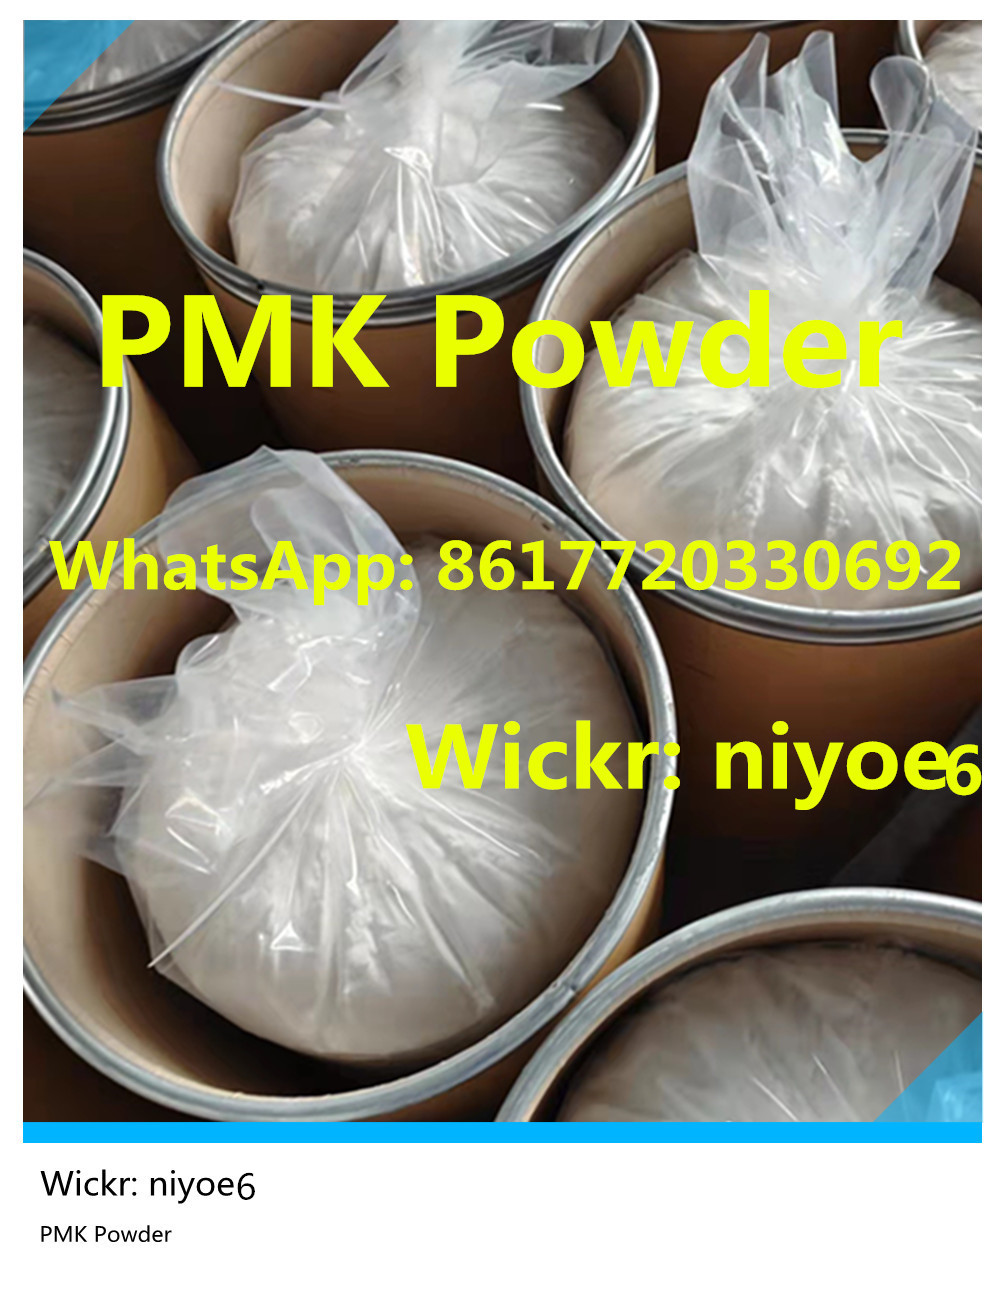 99% New Pmk Oil CAS 28578-16-7 BMK White Powder in Stock for Reseach Wickr: niyoe6